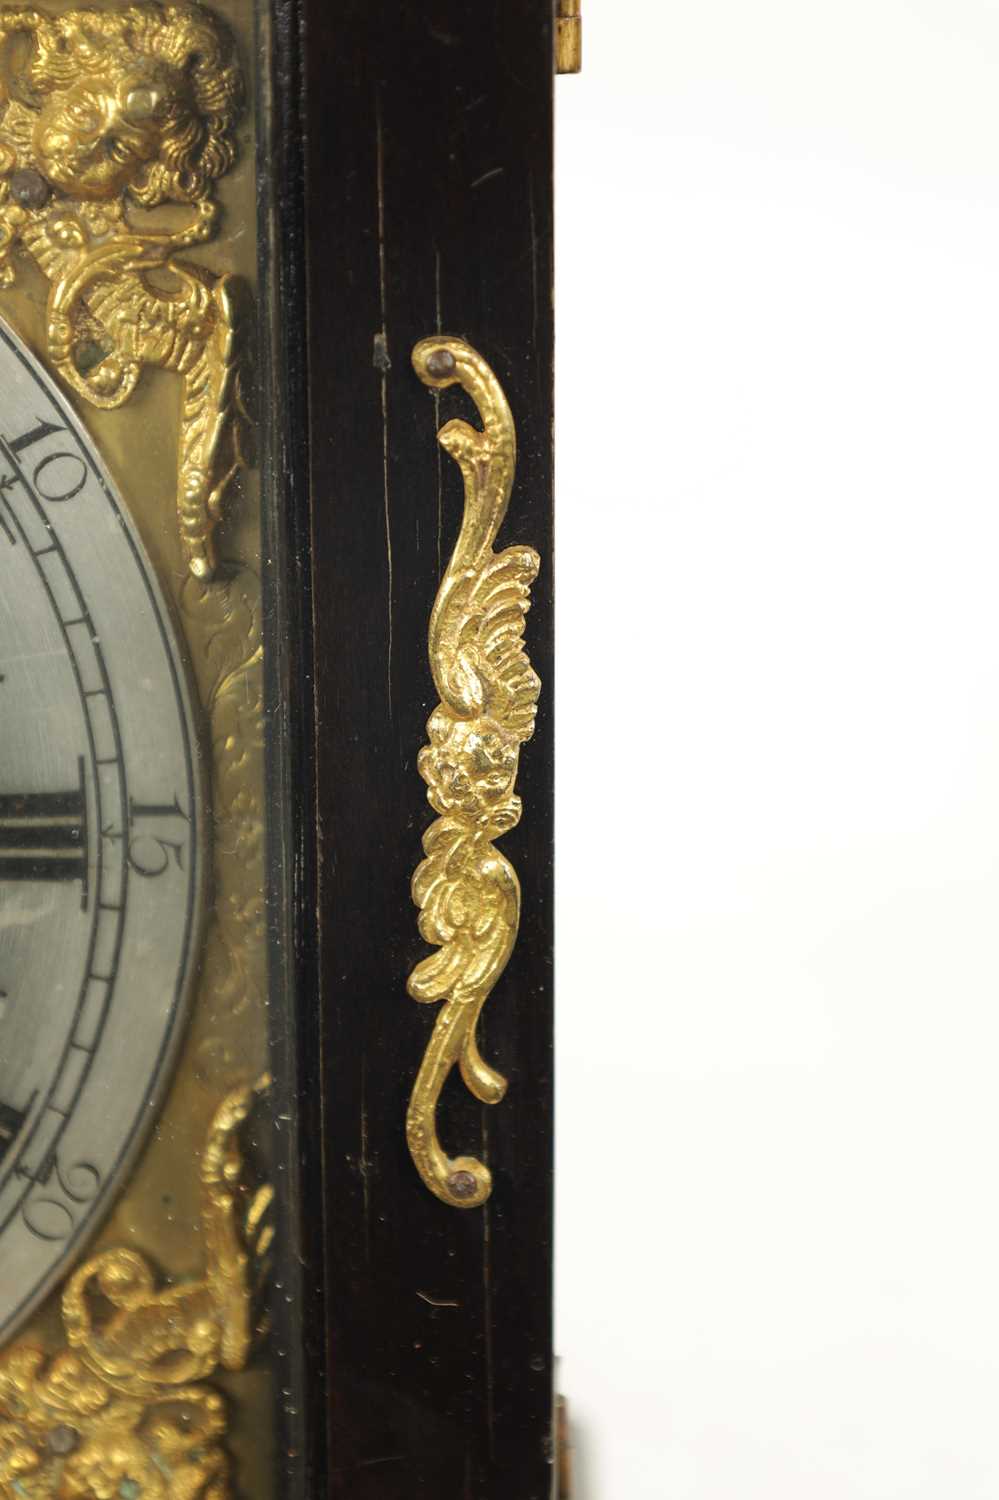 JOHN MILLER, LONDINI FECIT. A WILLIAM AND MARY EBONY VENEERED VERGE BRACKET CLOCK - Image 5 of 21